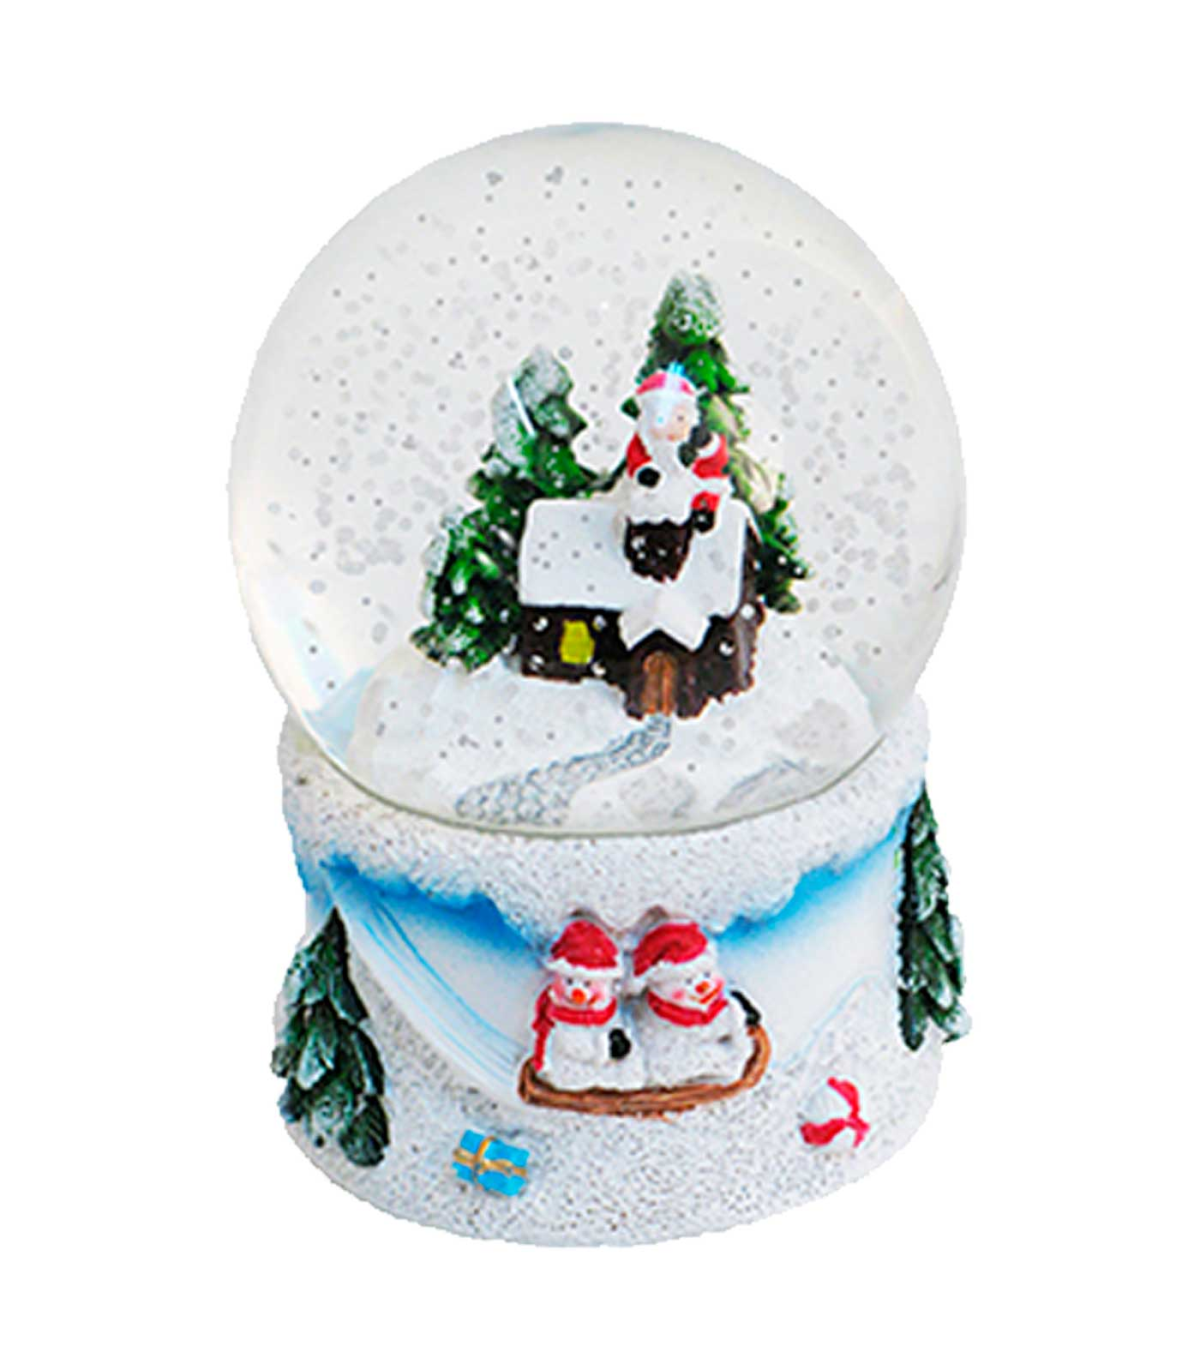 Tradineur - Bolas de nieve decorativa con luz - Fabricado en plástico -  Decoración para temporada Navideña - Ø 5 x 7,5 cm - Mode